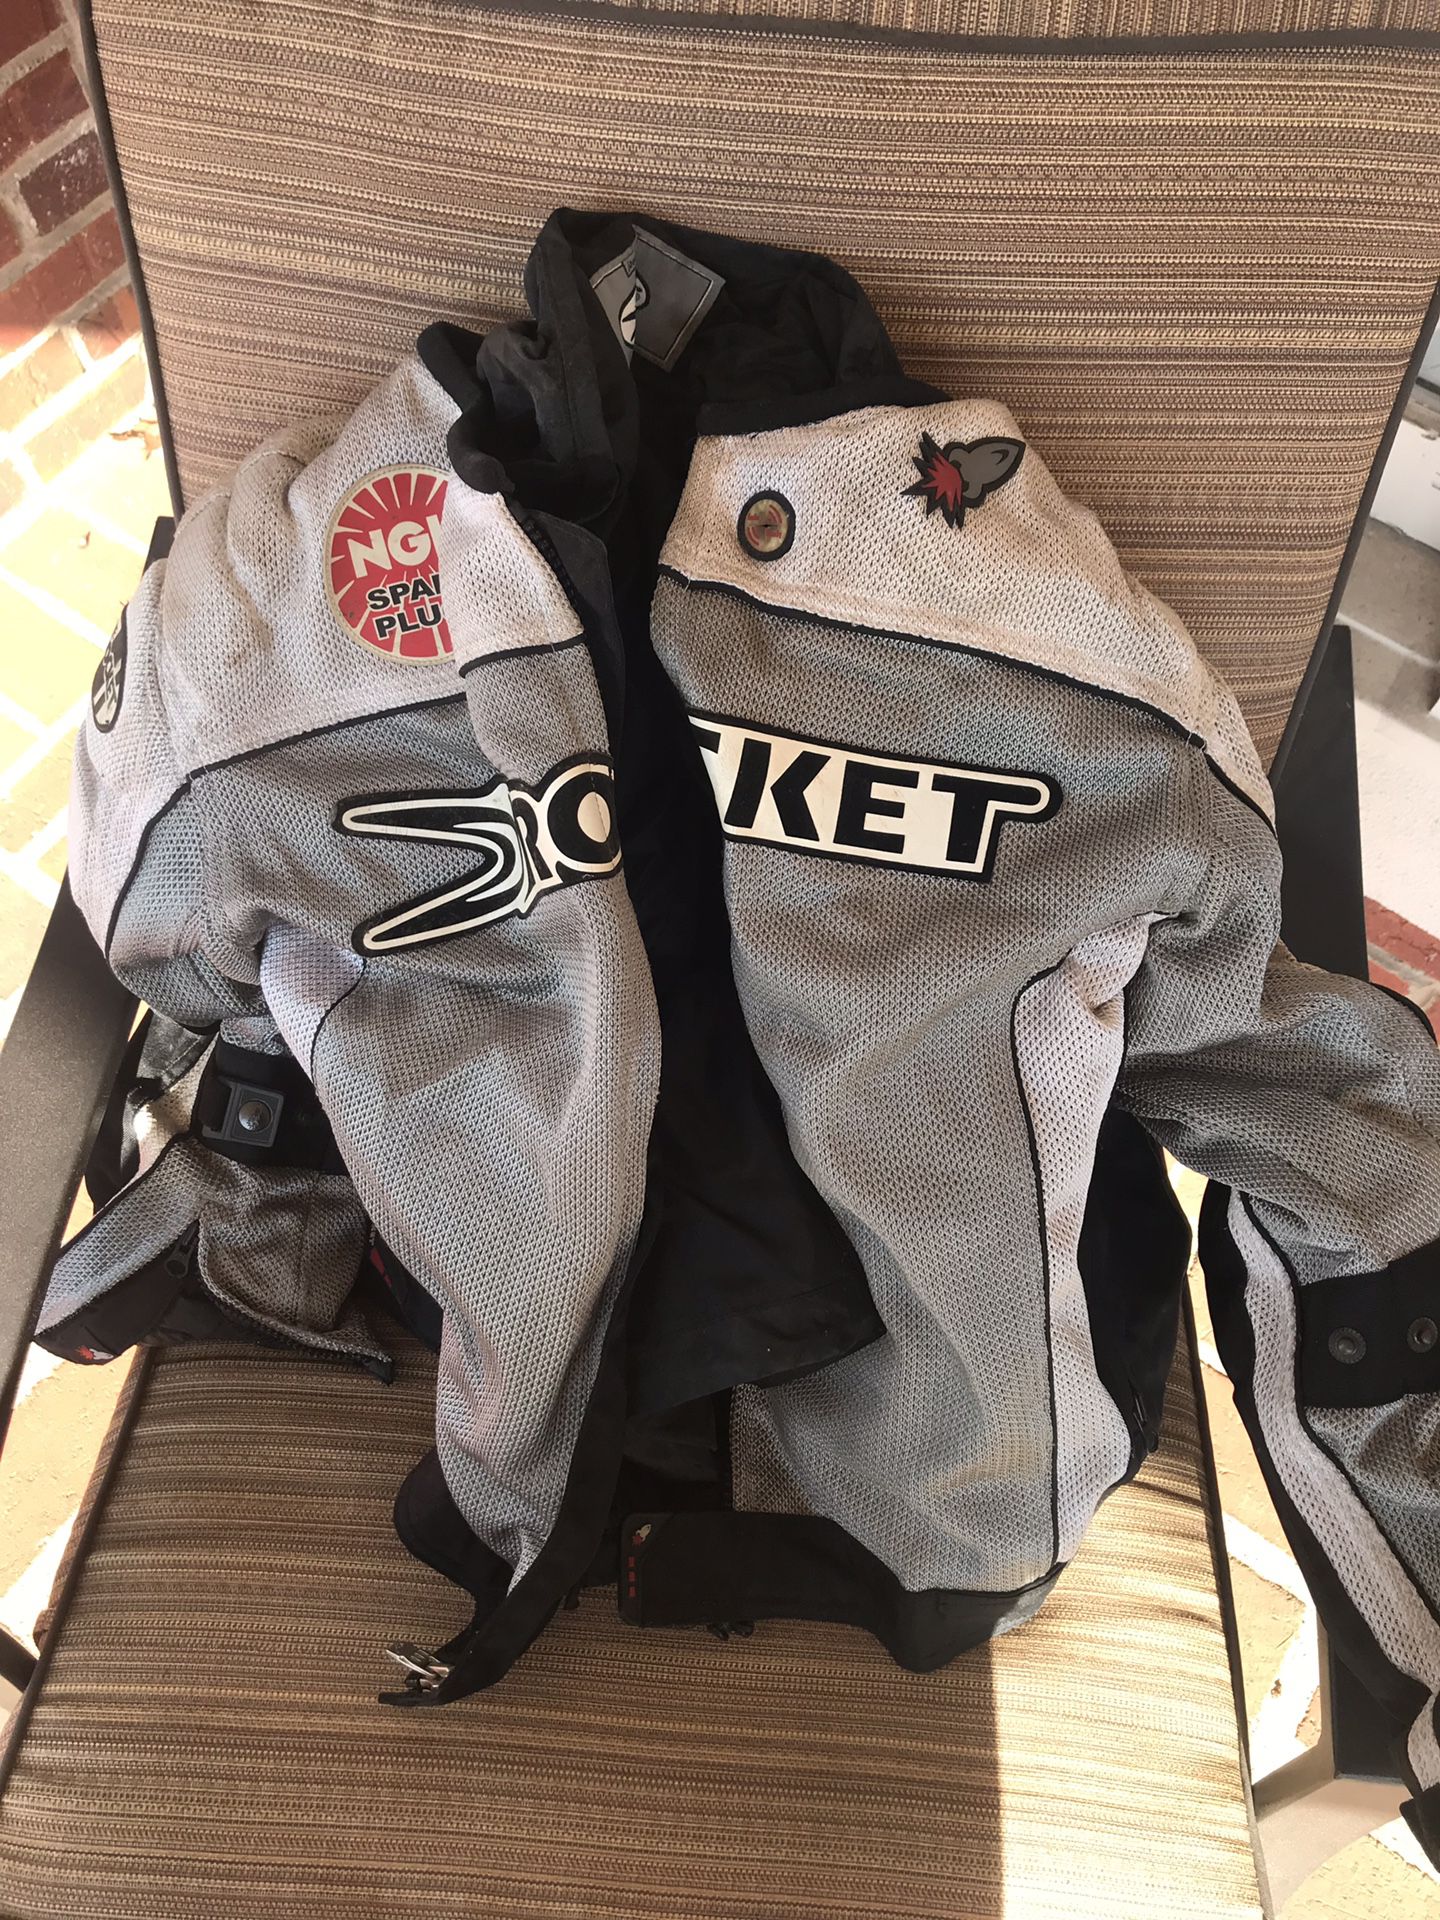 Men’s Joe rocket jacket mesh great for riding.